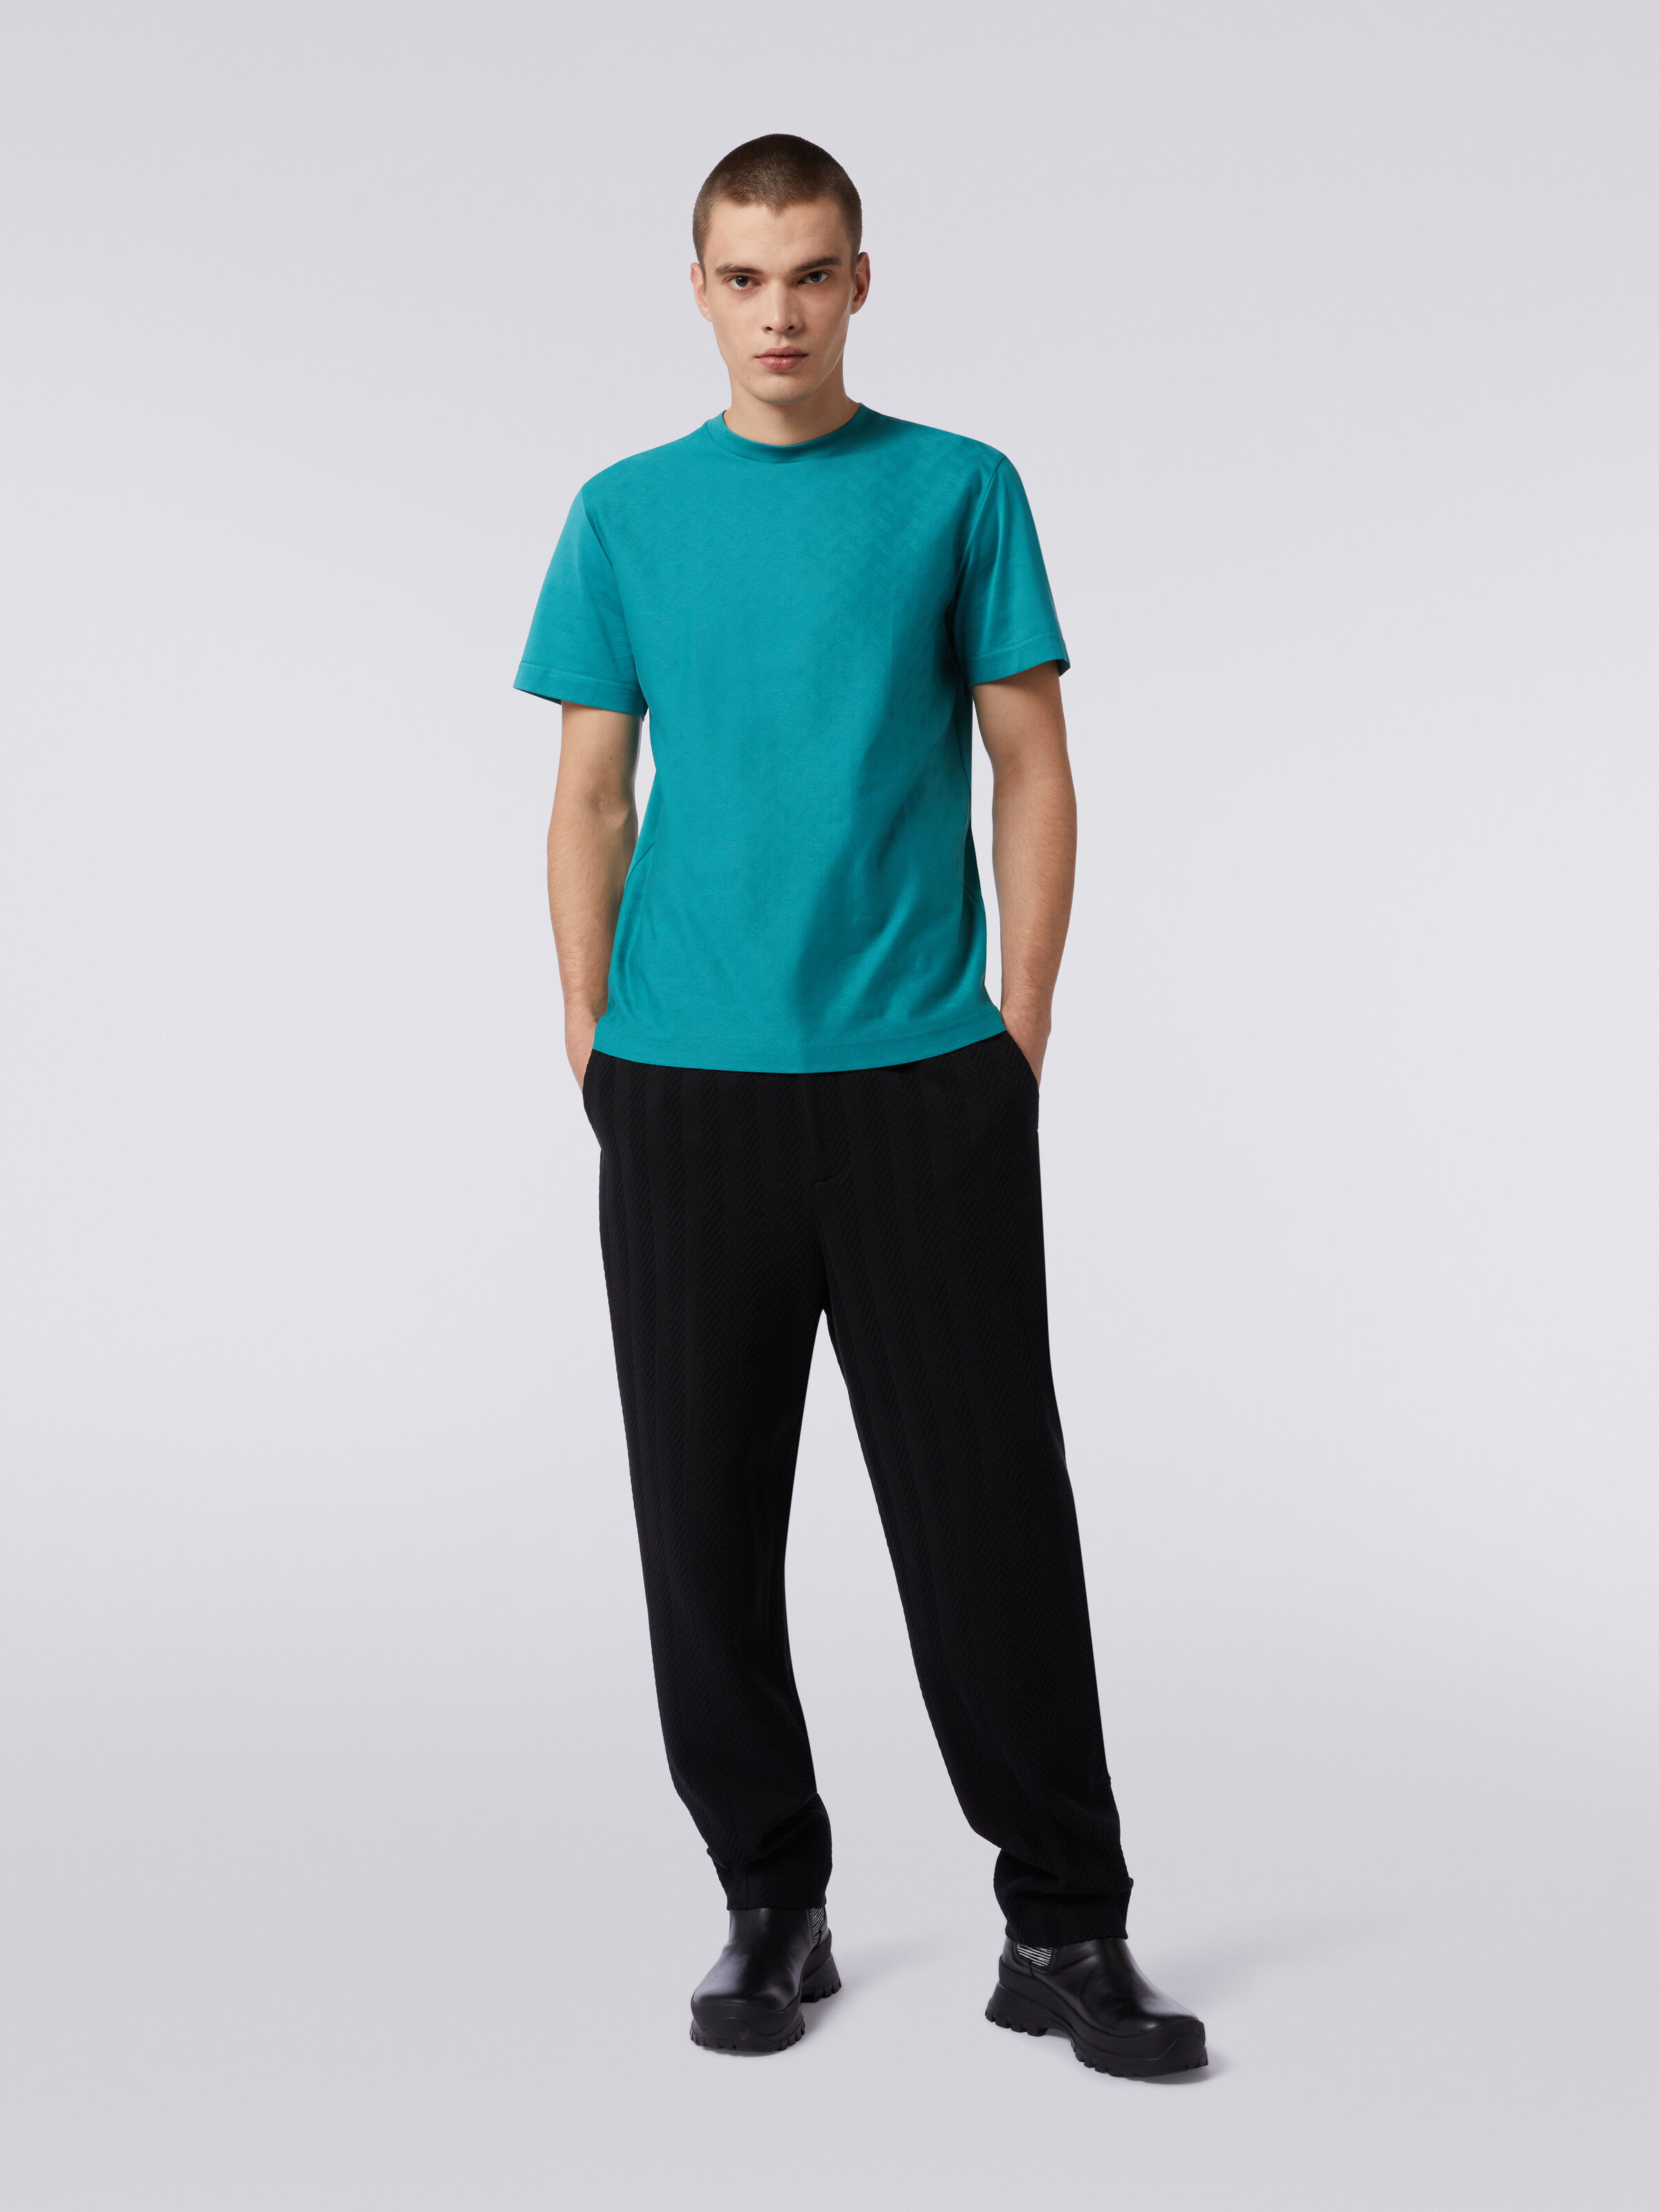 Kurzärmeliges Baumwoll-T-Shirt mit Zickzackmuster, Grün  - 1